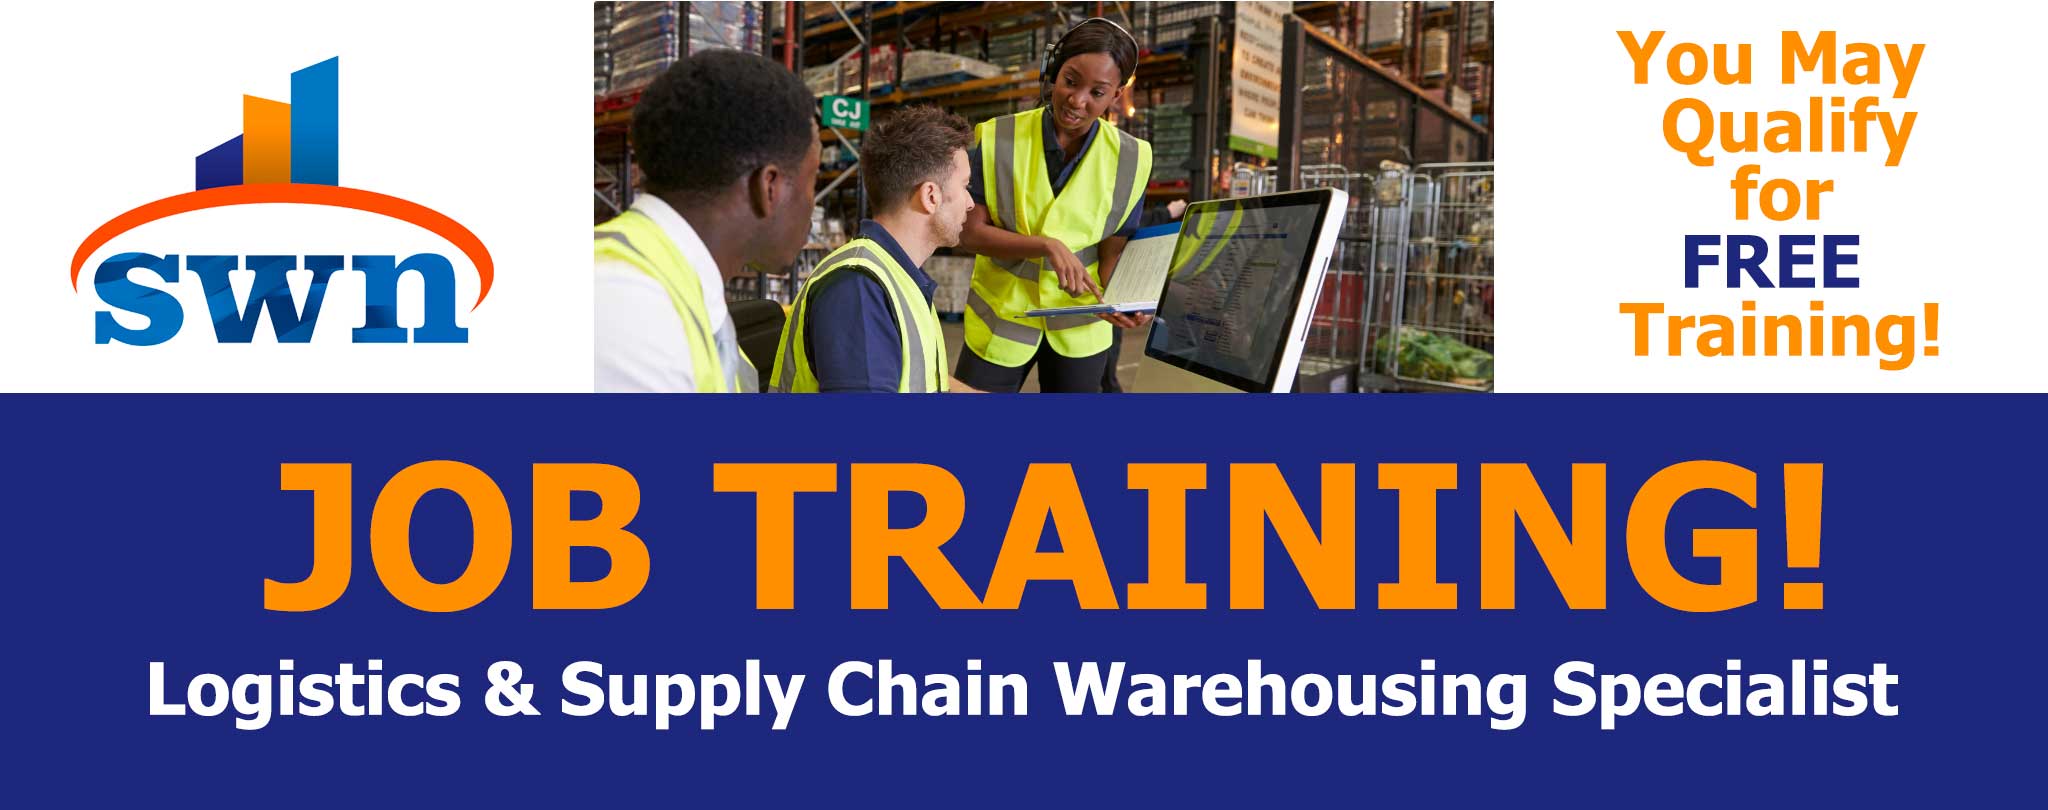 Job Training: Logistics & Supply Chain Warehousing Specialist